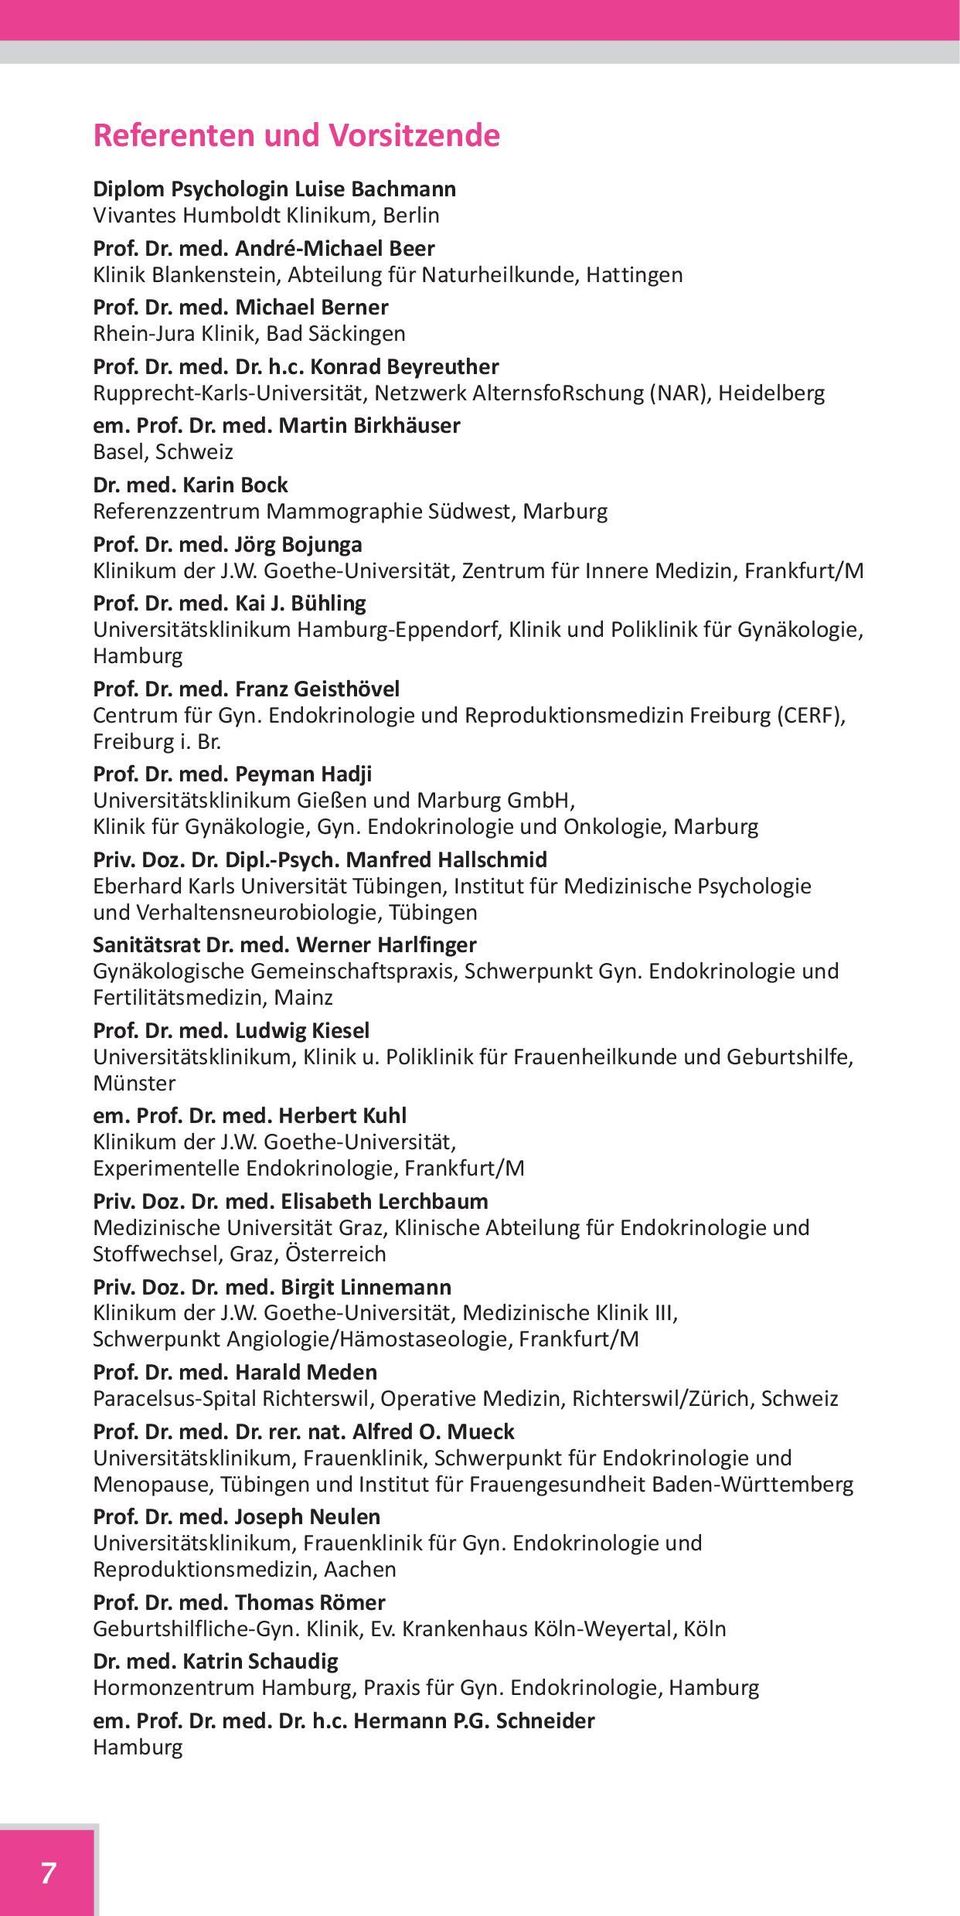 Dr. med. Jörg Bojunga Klinikum der J.W. Goethe-Universität, Zentrum für Innere Medizin, Frankfurt/M Prof. Dr. med. Kai J.